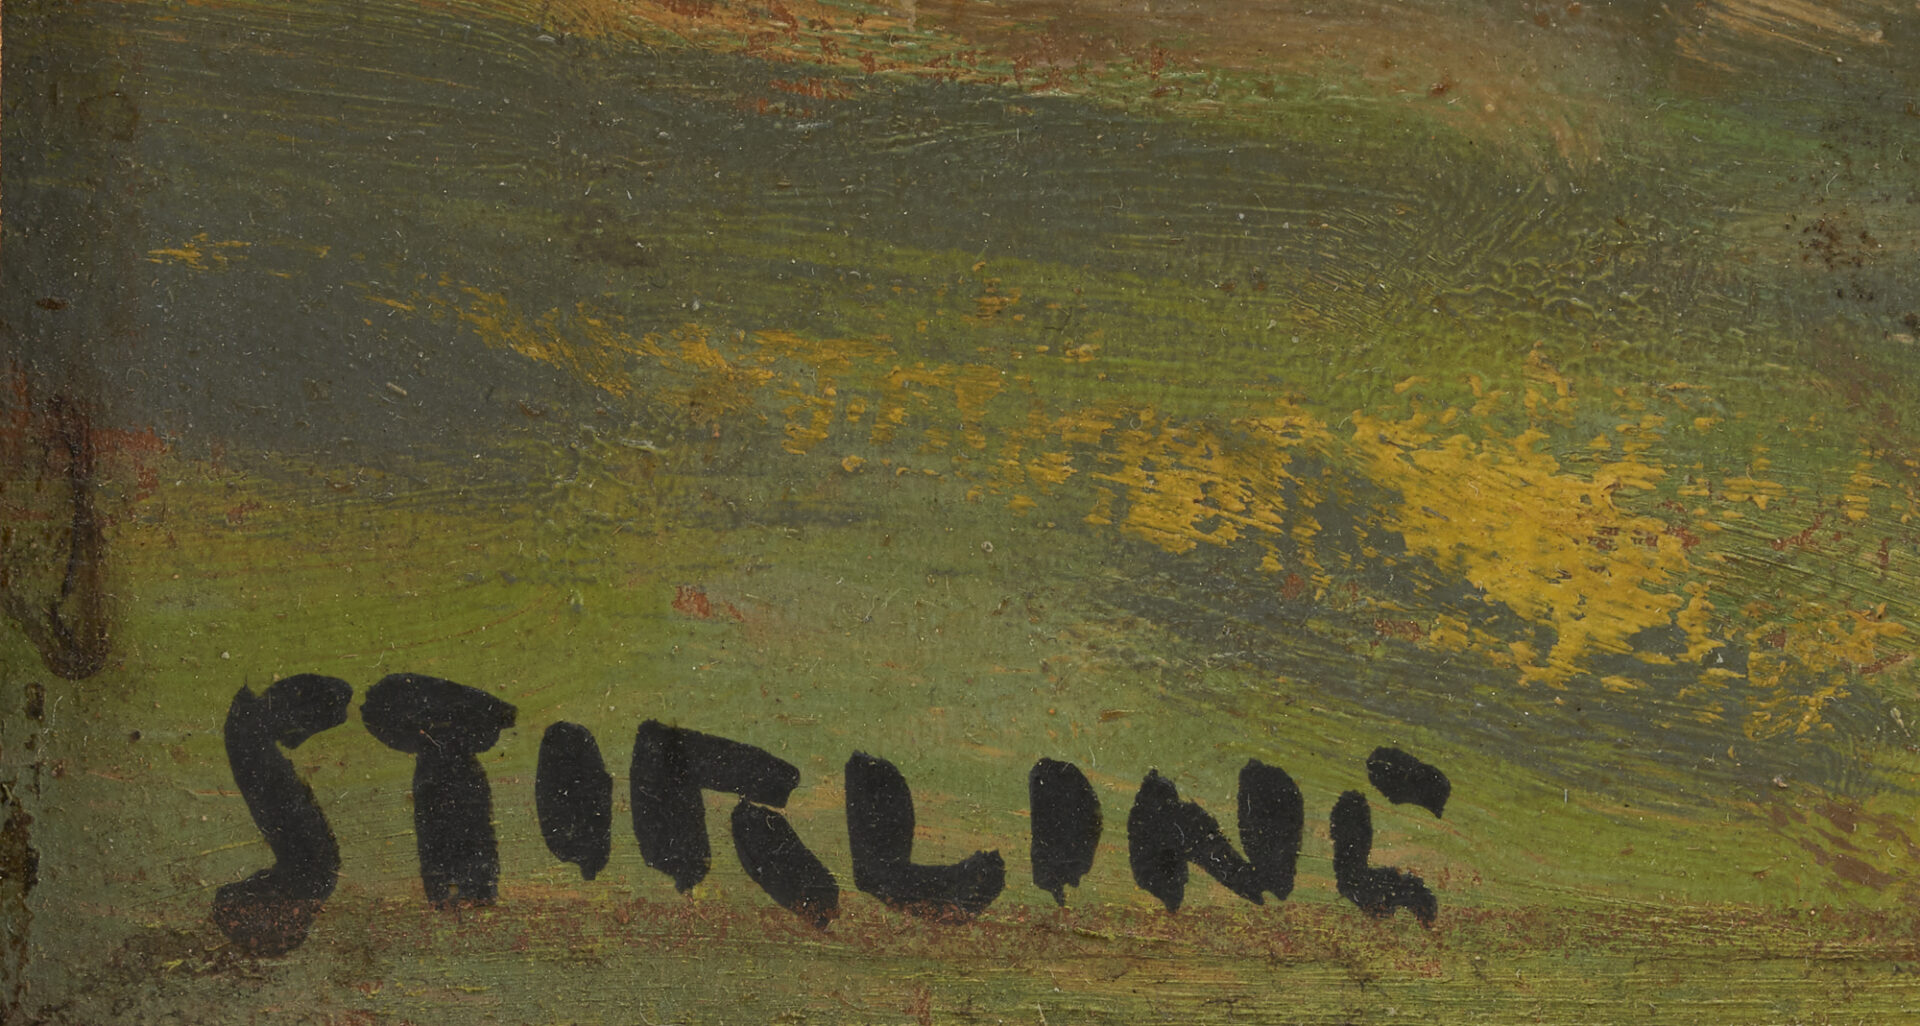 Lot 833: David Stirling O/B Mountain Landscape Painting w/ Aspens